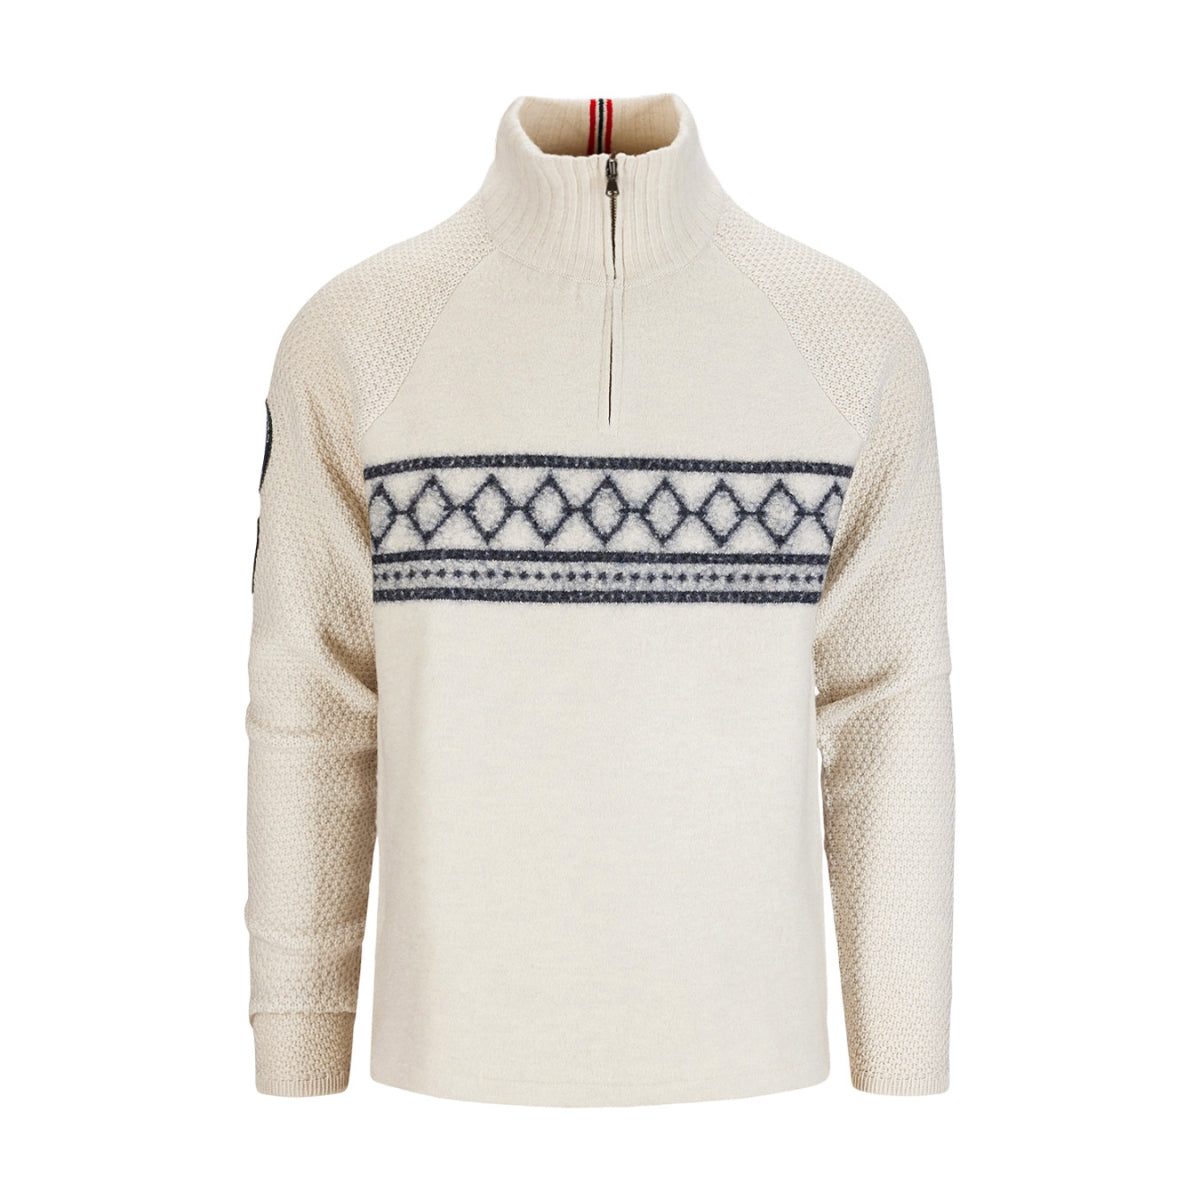 Amundsen Sports - Men's Boiled Ski Sweater - Oatmeal